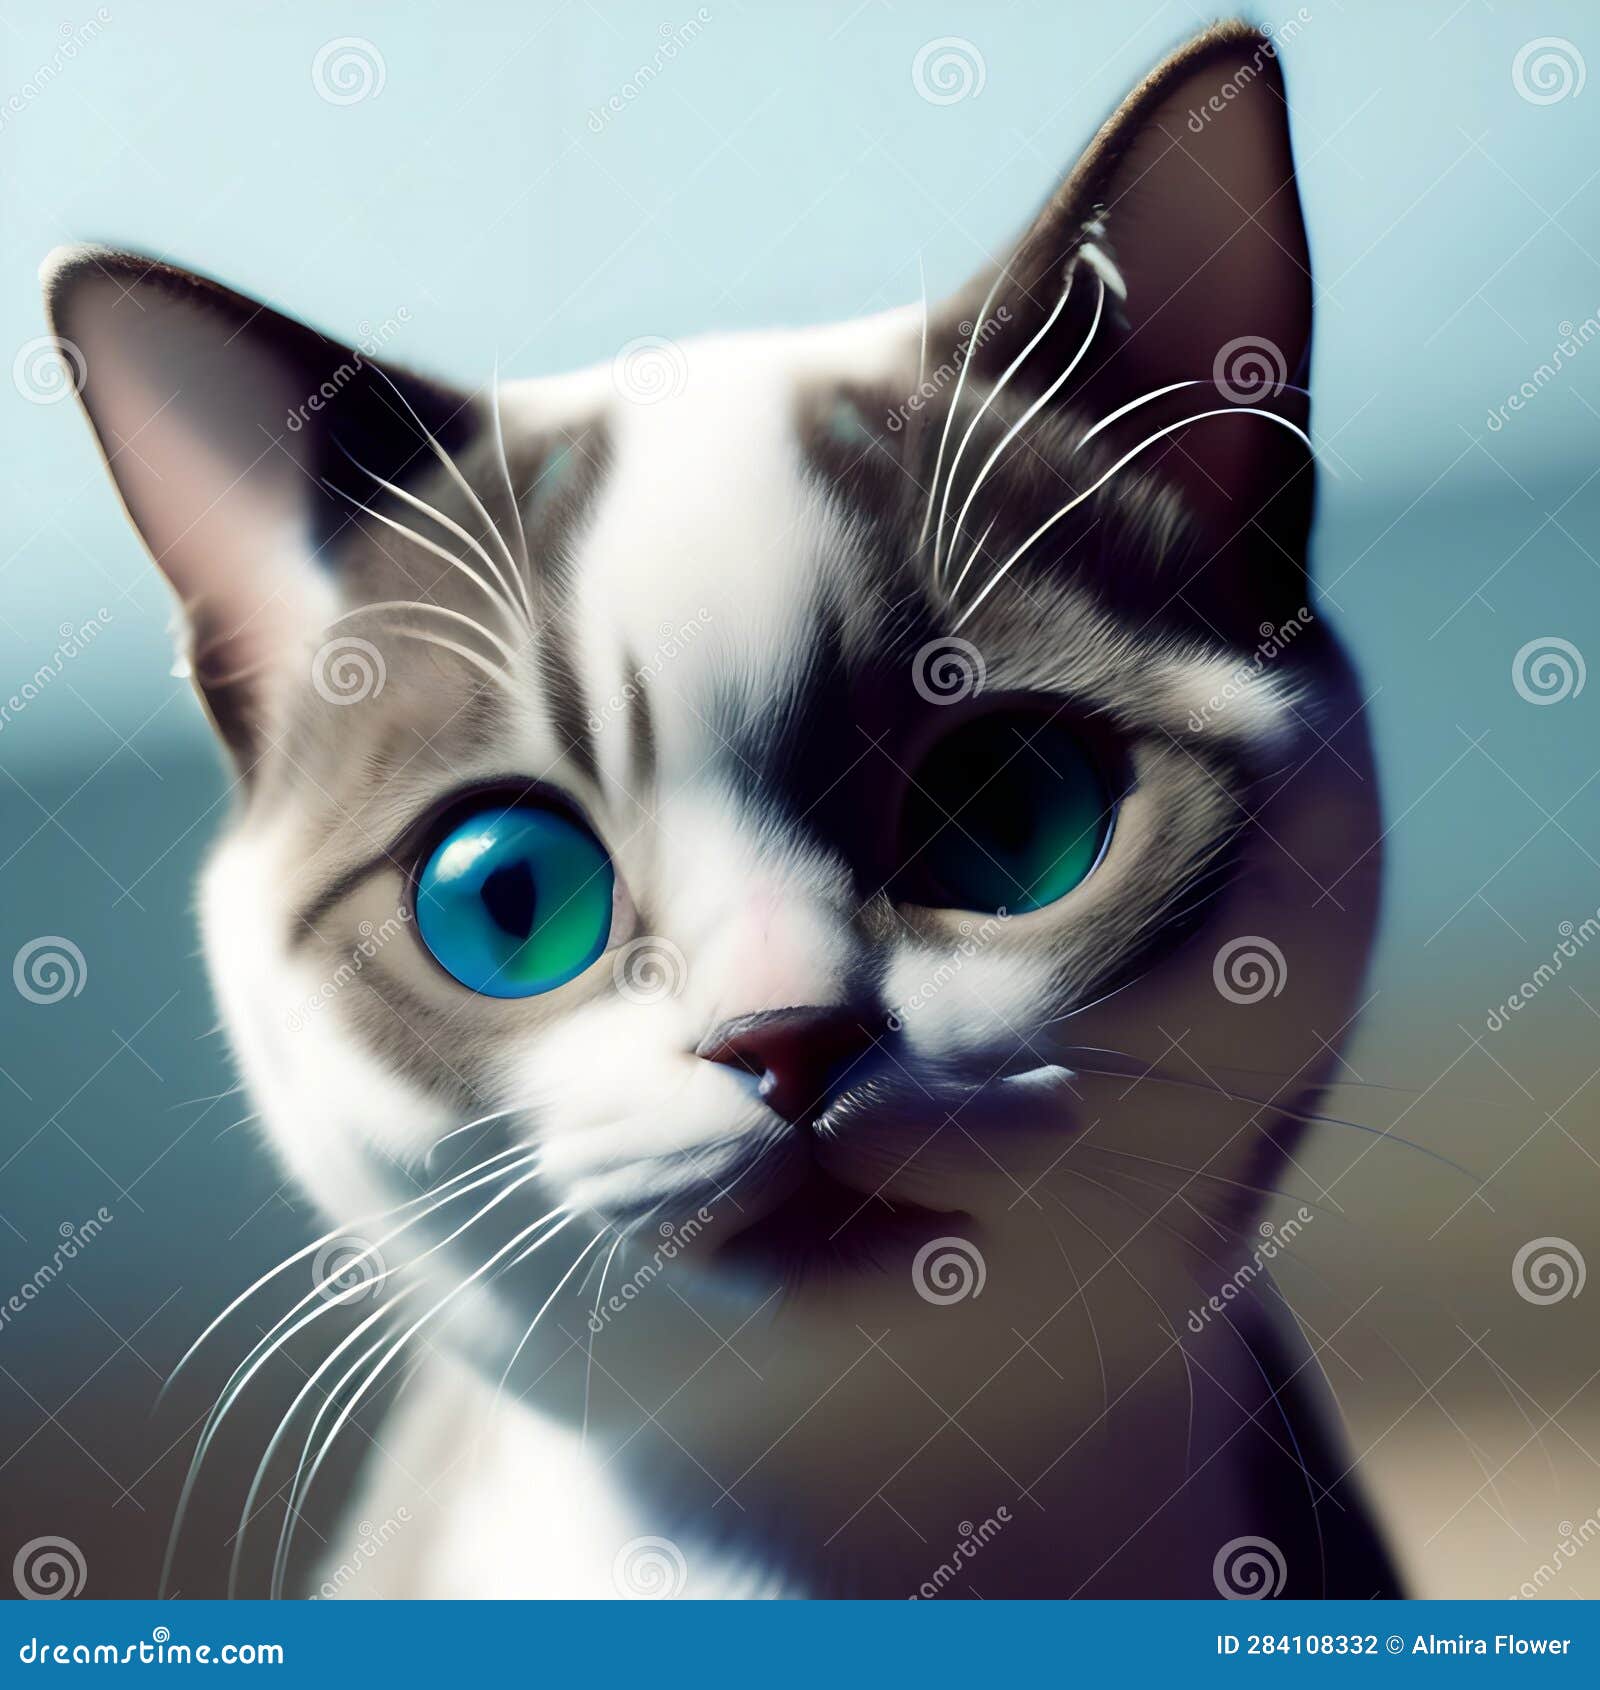 ojoz azules cat 3d 